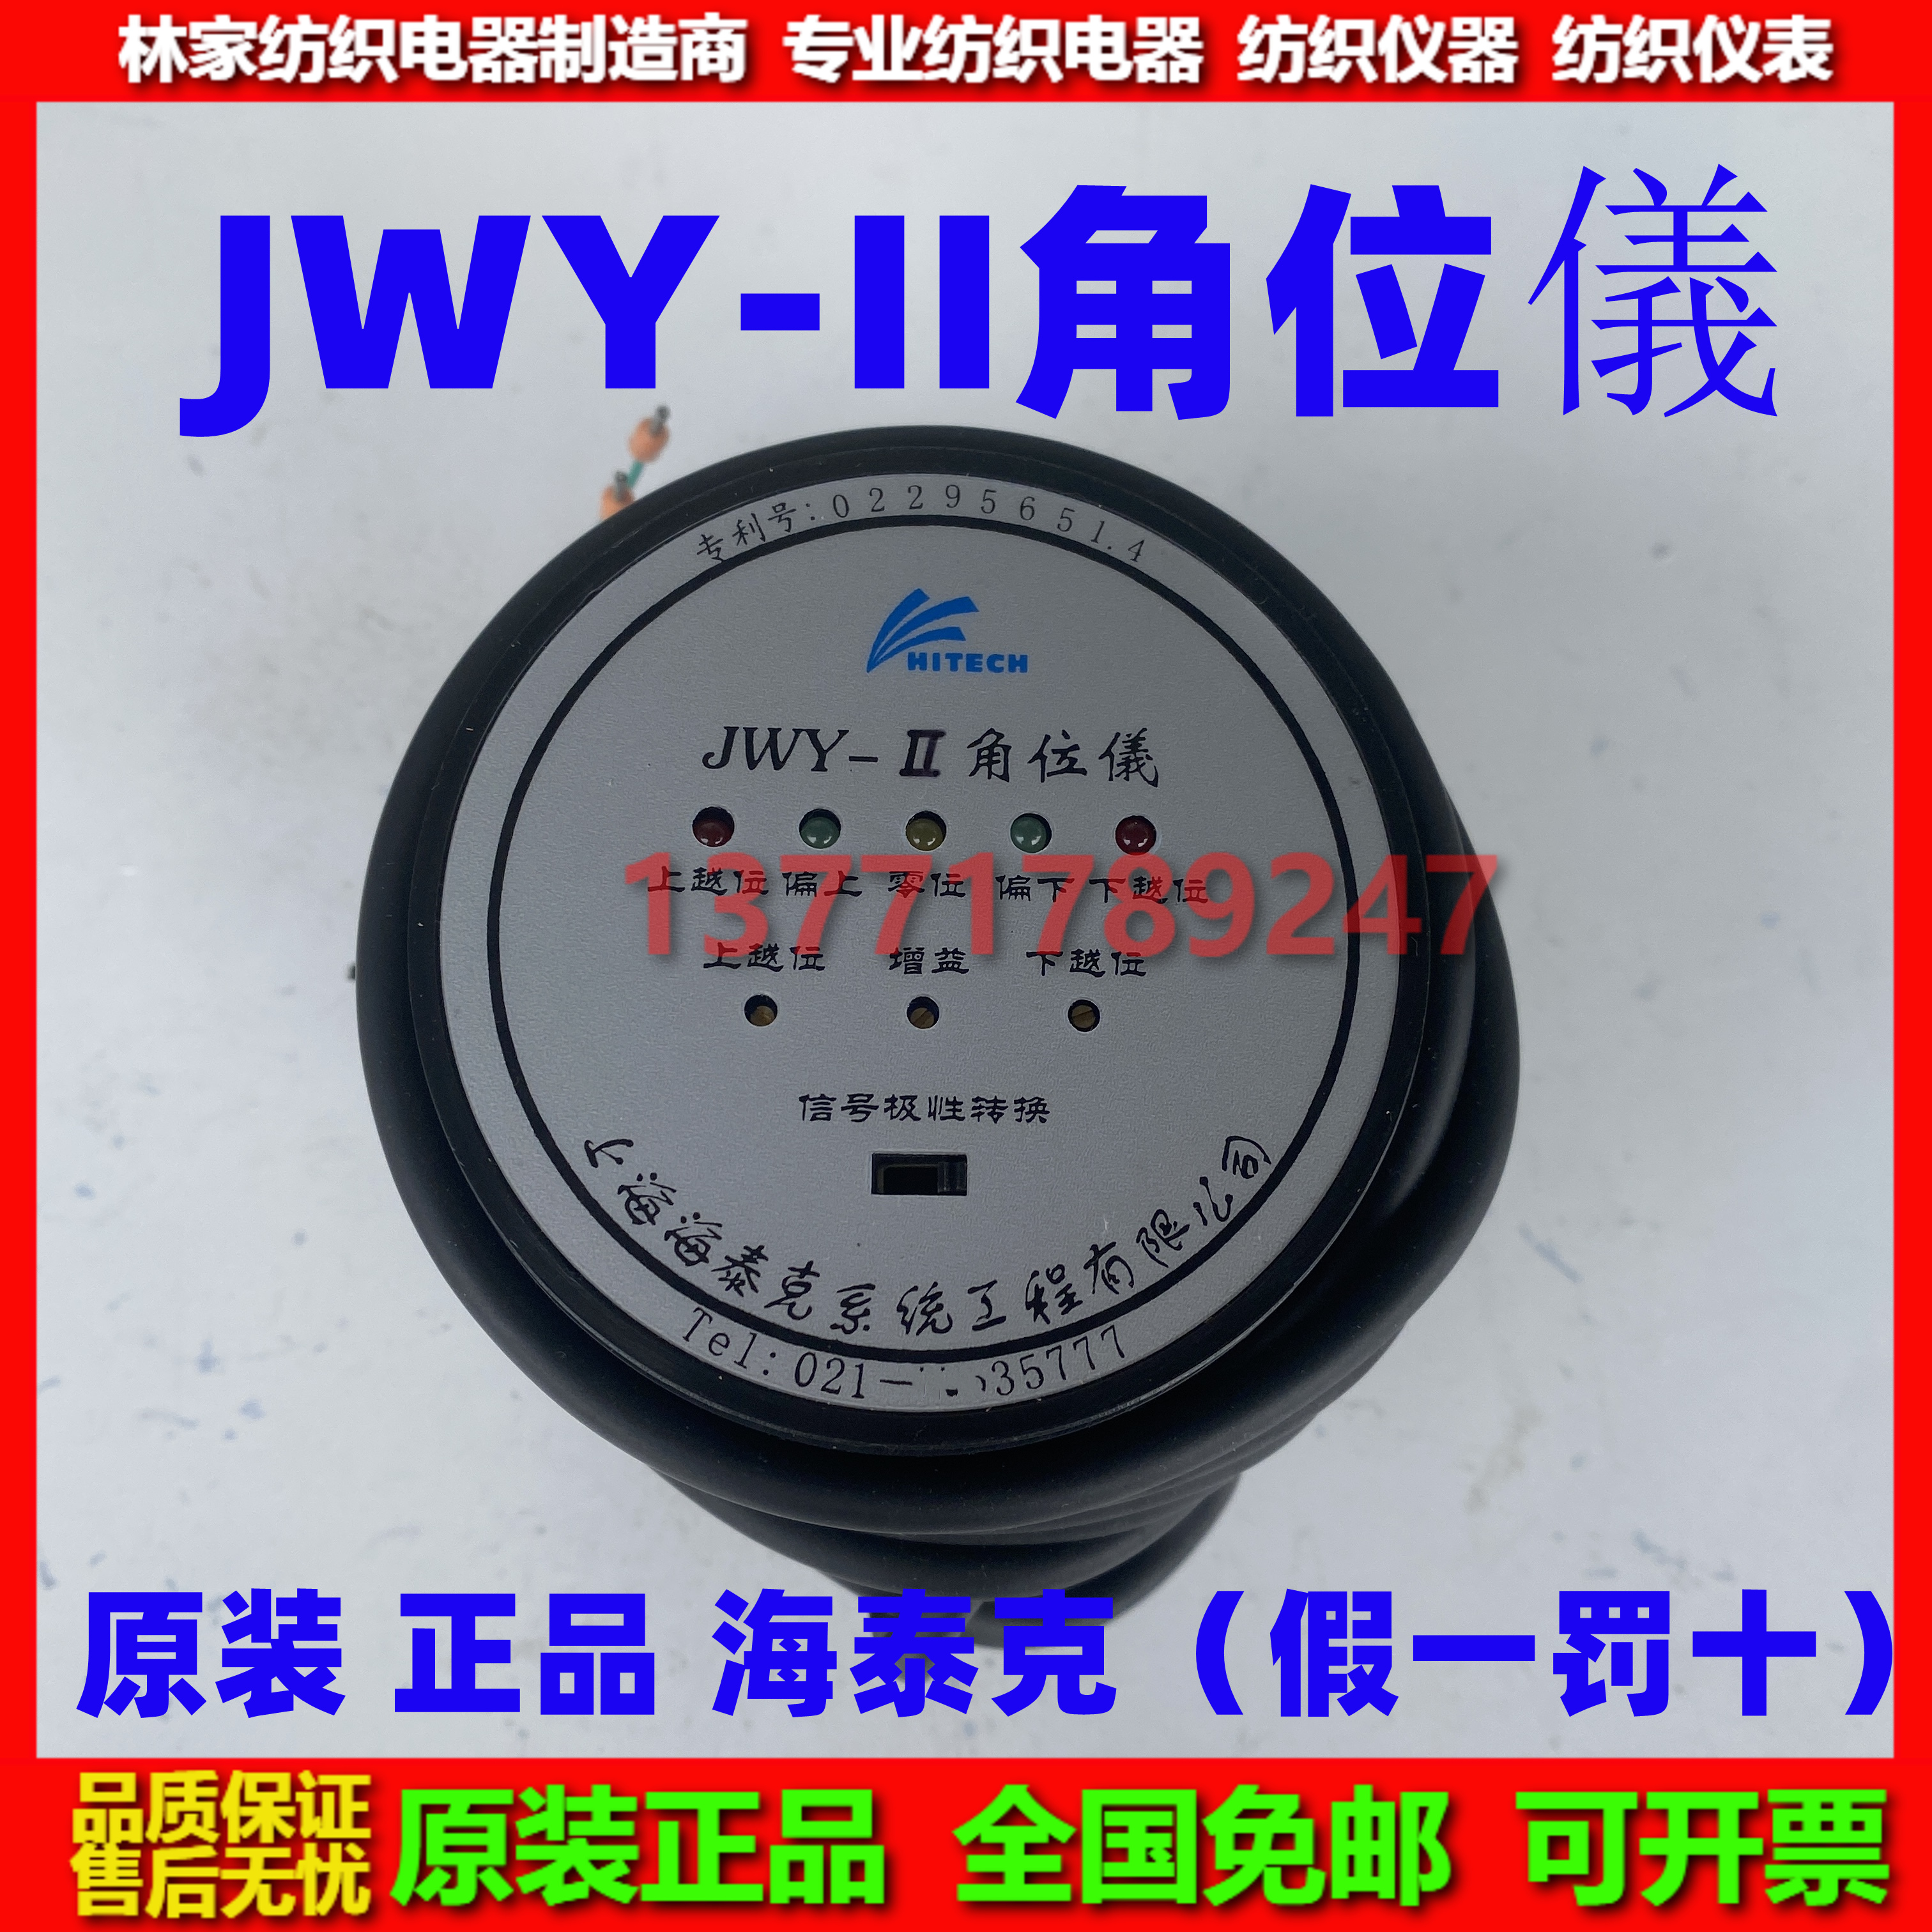 JWY-I角位仪JWY-II角位仪JWY-IIII角位仪JWY-123 JWY-1正品海泰克 - 图2